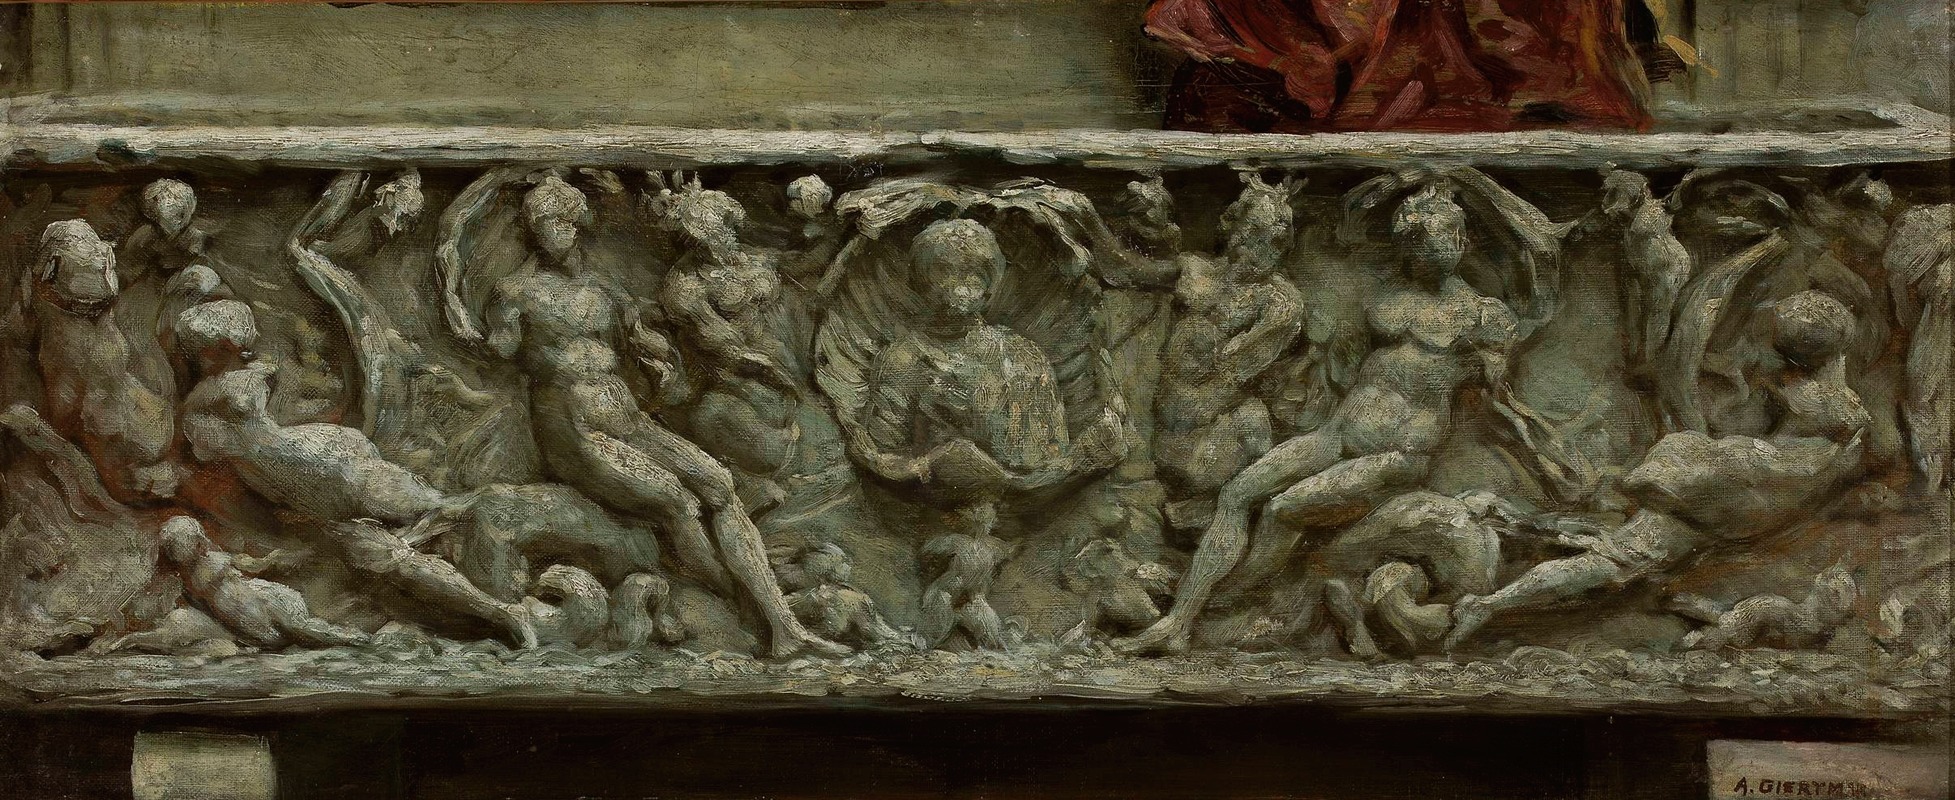 Aleksander Gierymski - Fragment of sarcophagus from Palazzo Giustiniani in Rome